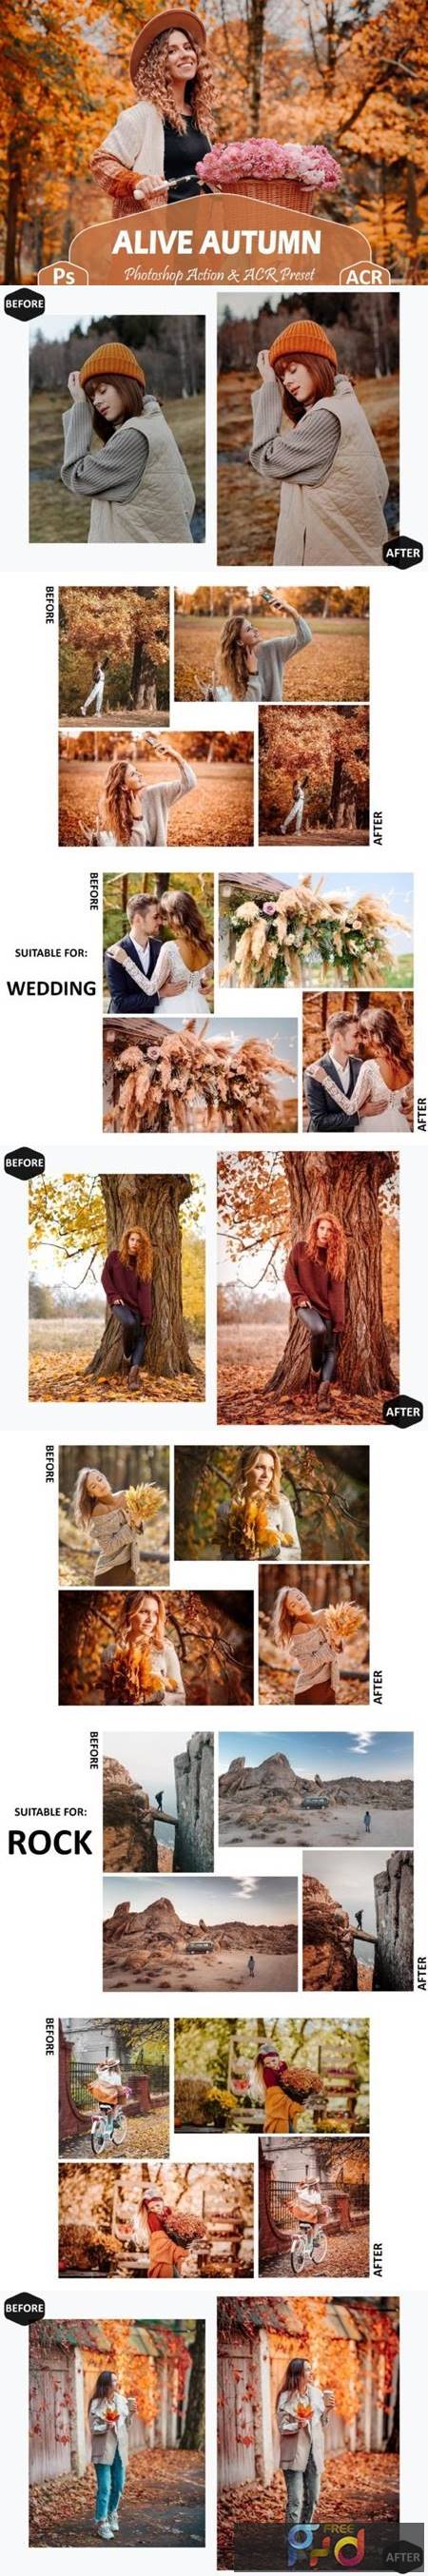 10 Alive Autumn Photoshop Actions 37810302 1